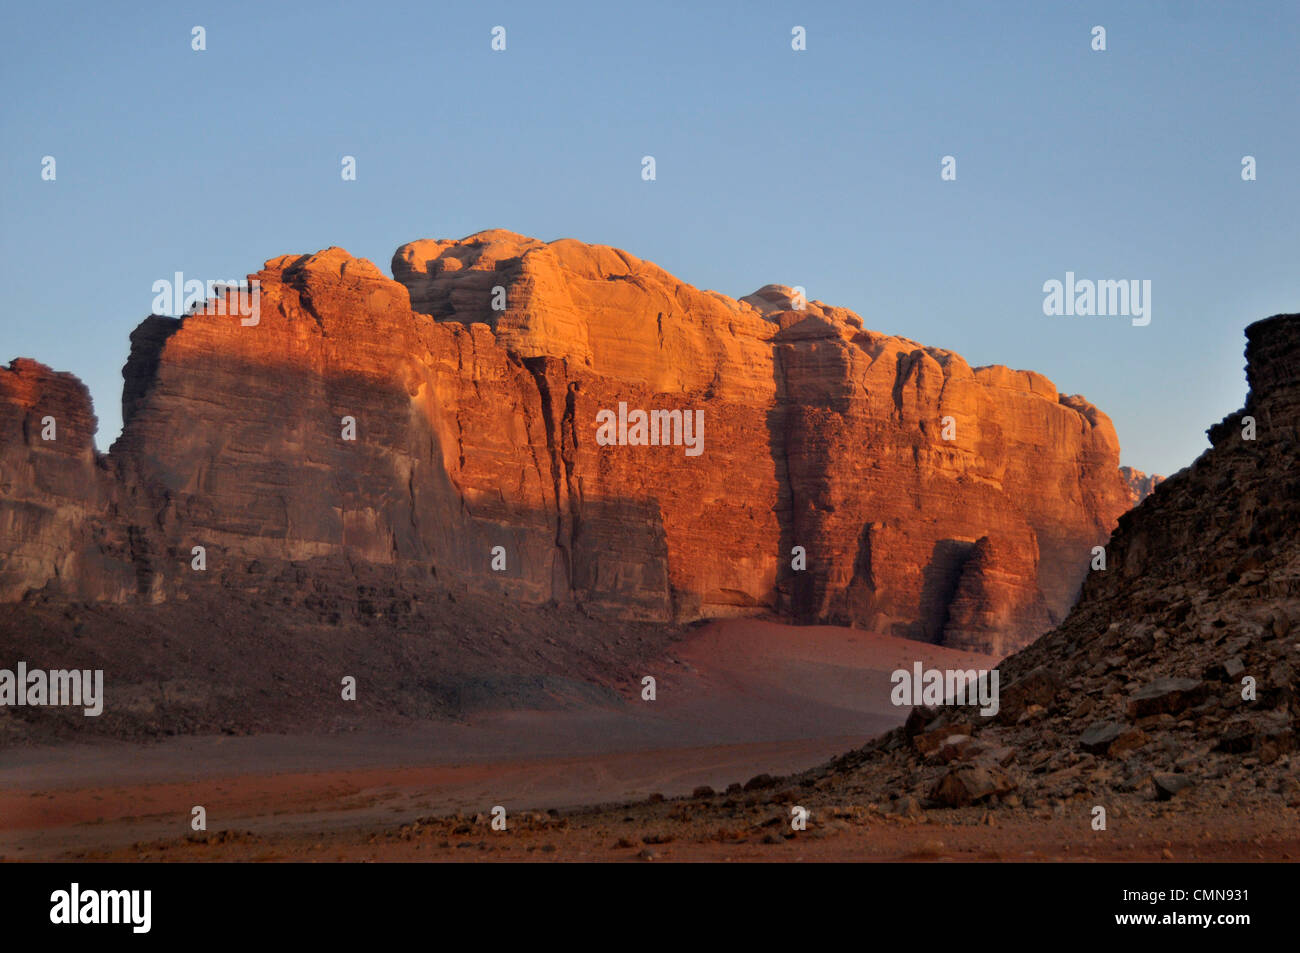 Mountain of sandstone rock in Wadi Rum, Jordan Stock Photo